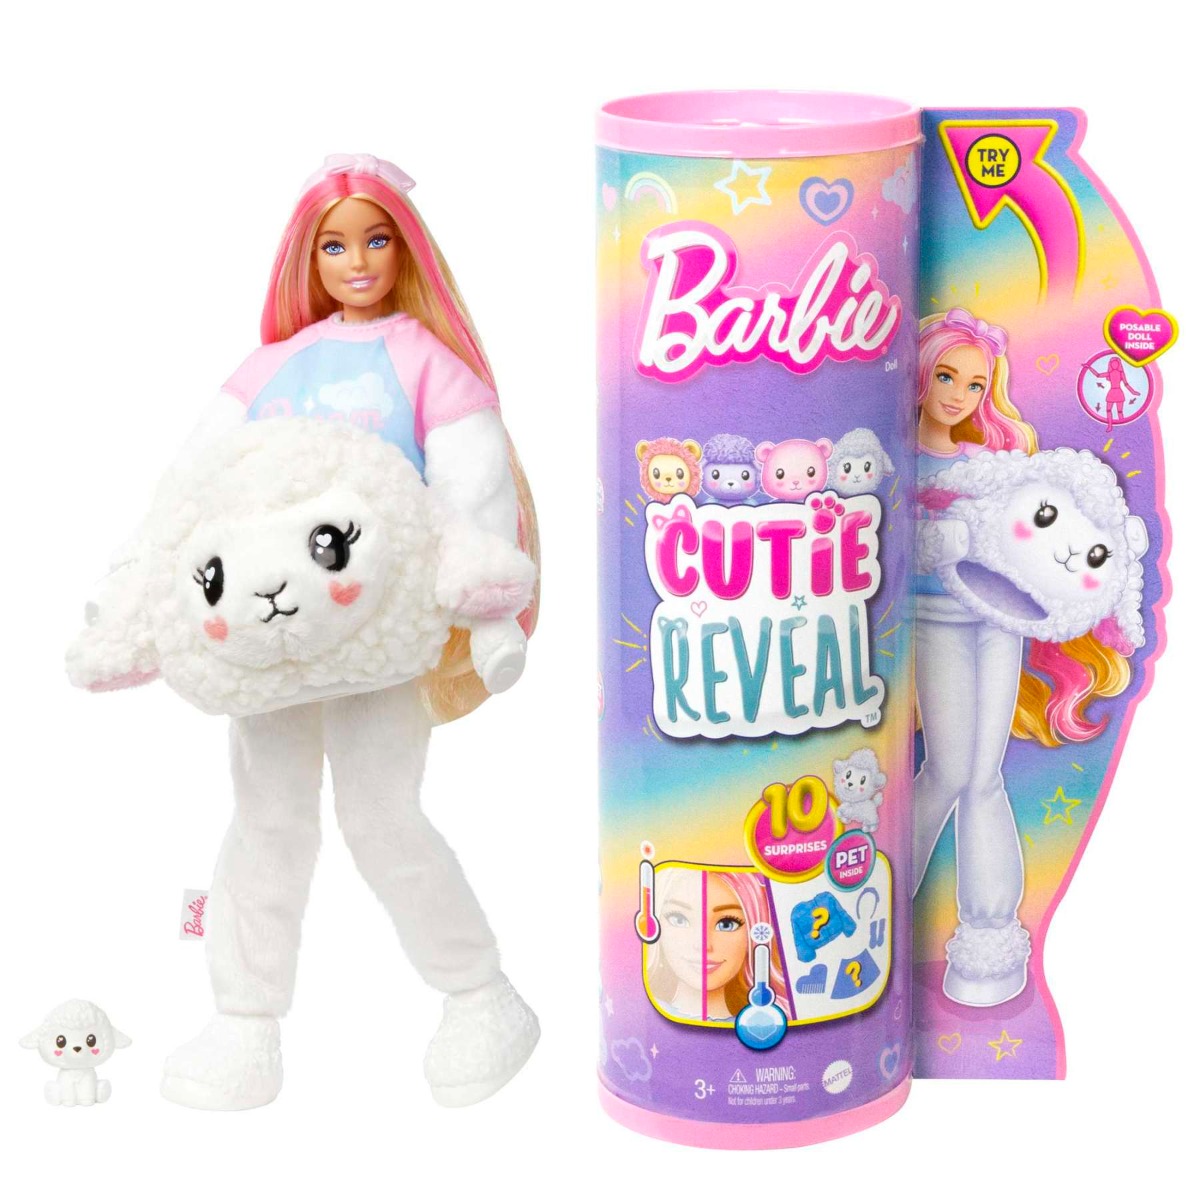  Papusa surpriza Barbie, Cutie Reveal Lamb, 10 surprize, HKR03 